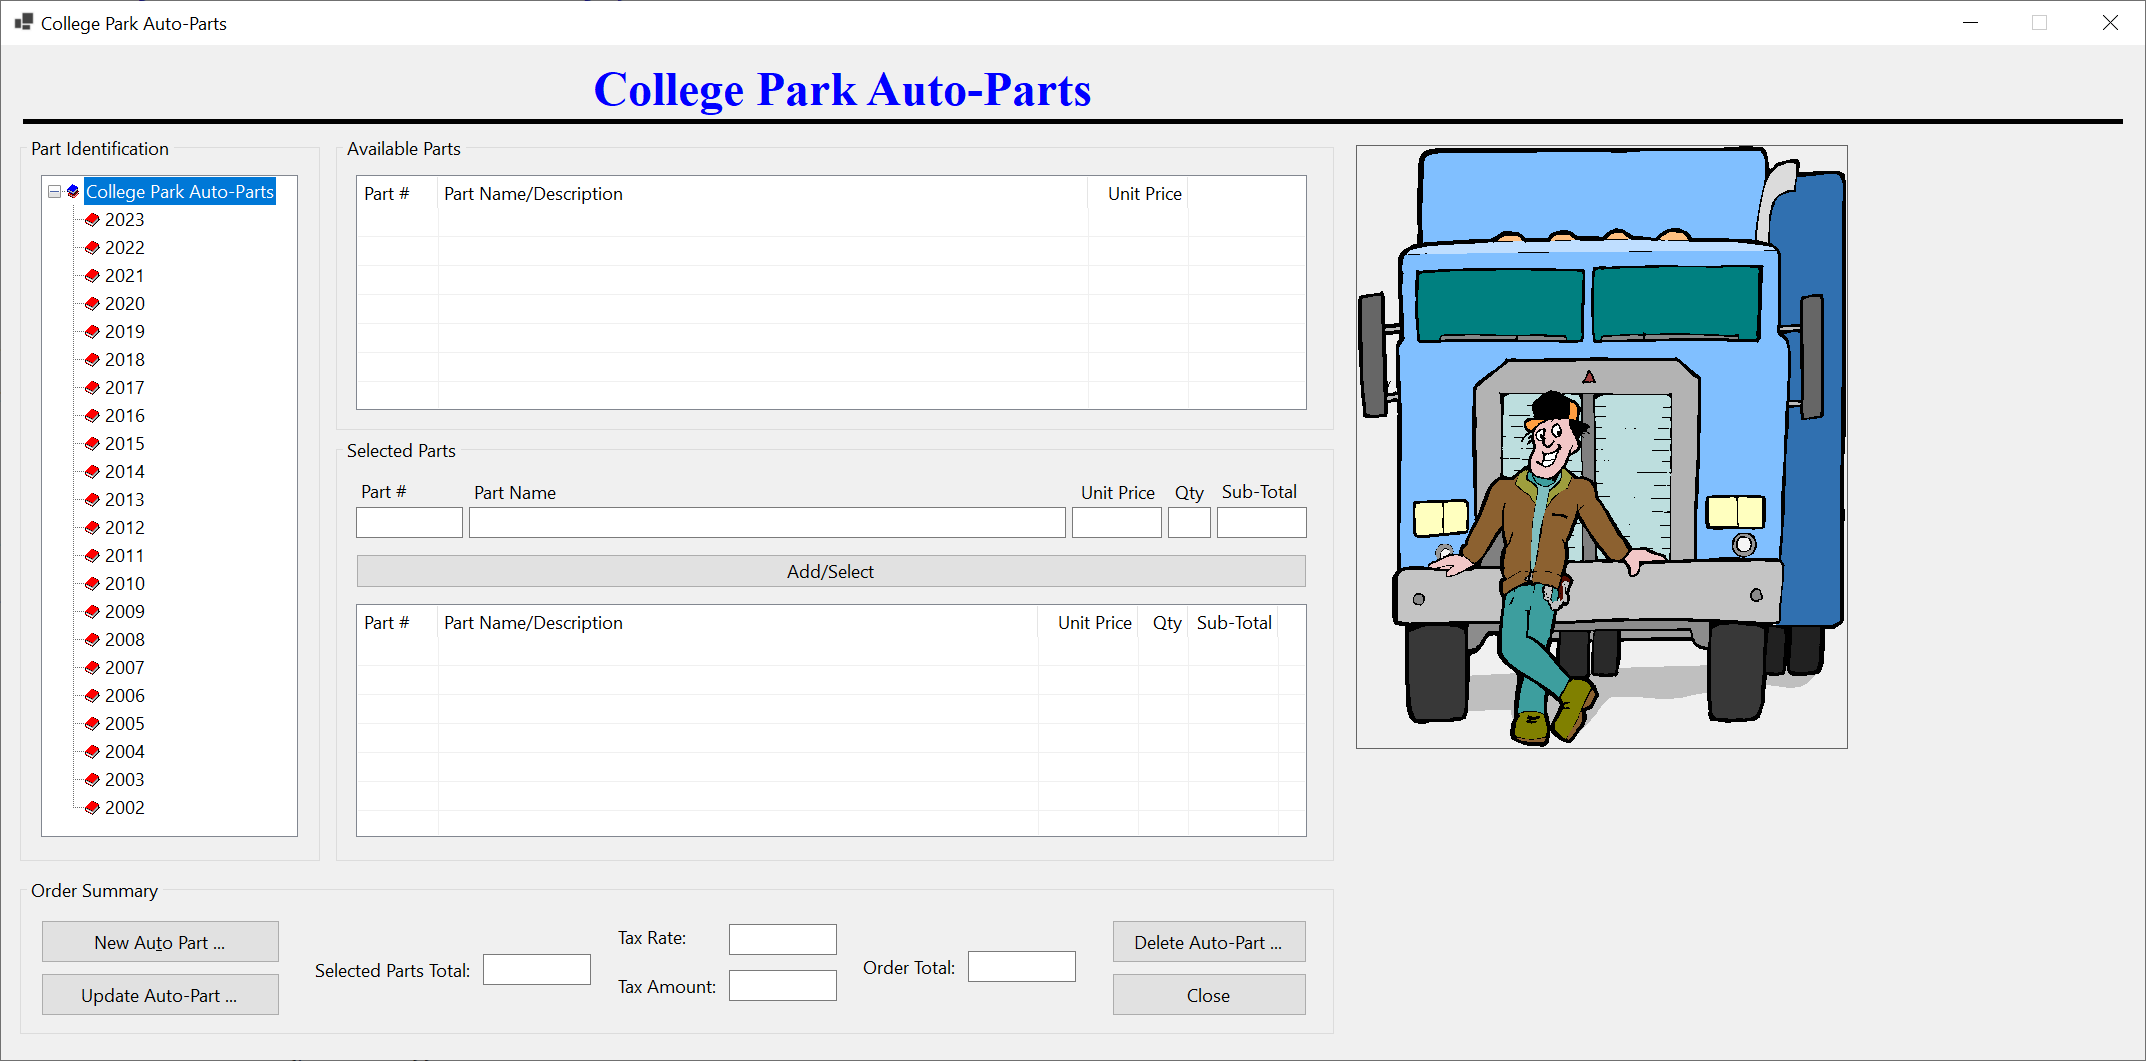 College Park Auto-Parts - Store Inventory